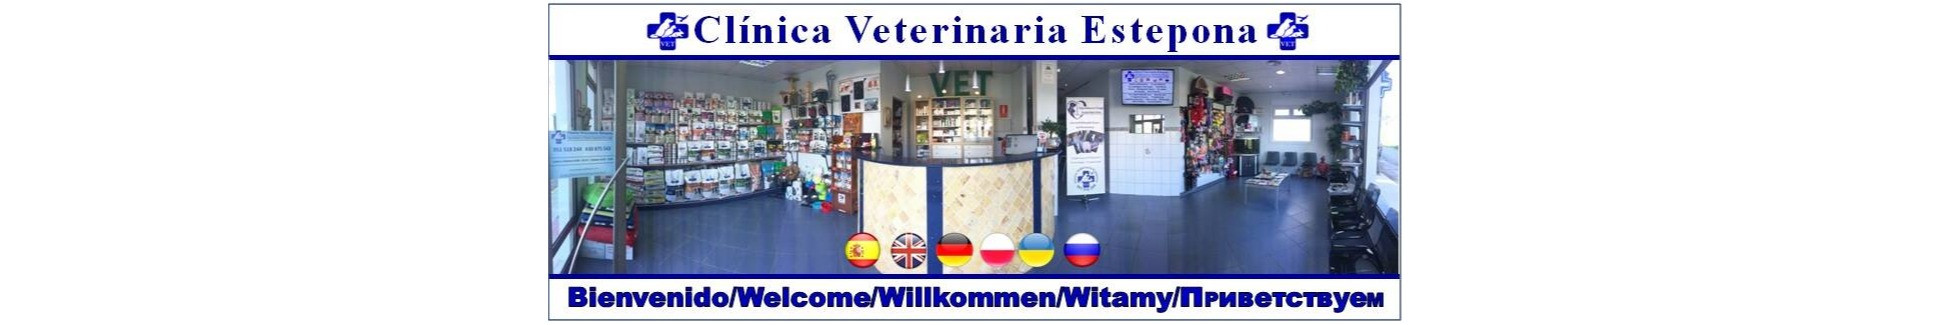 Clinica Veterinaria Estepona